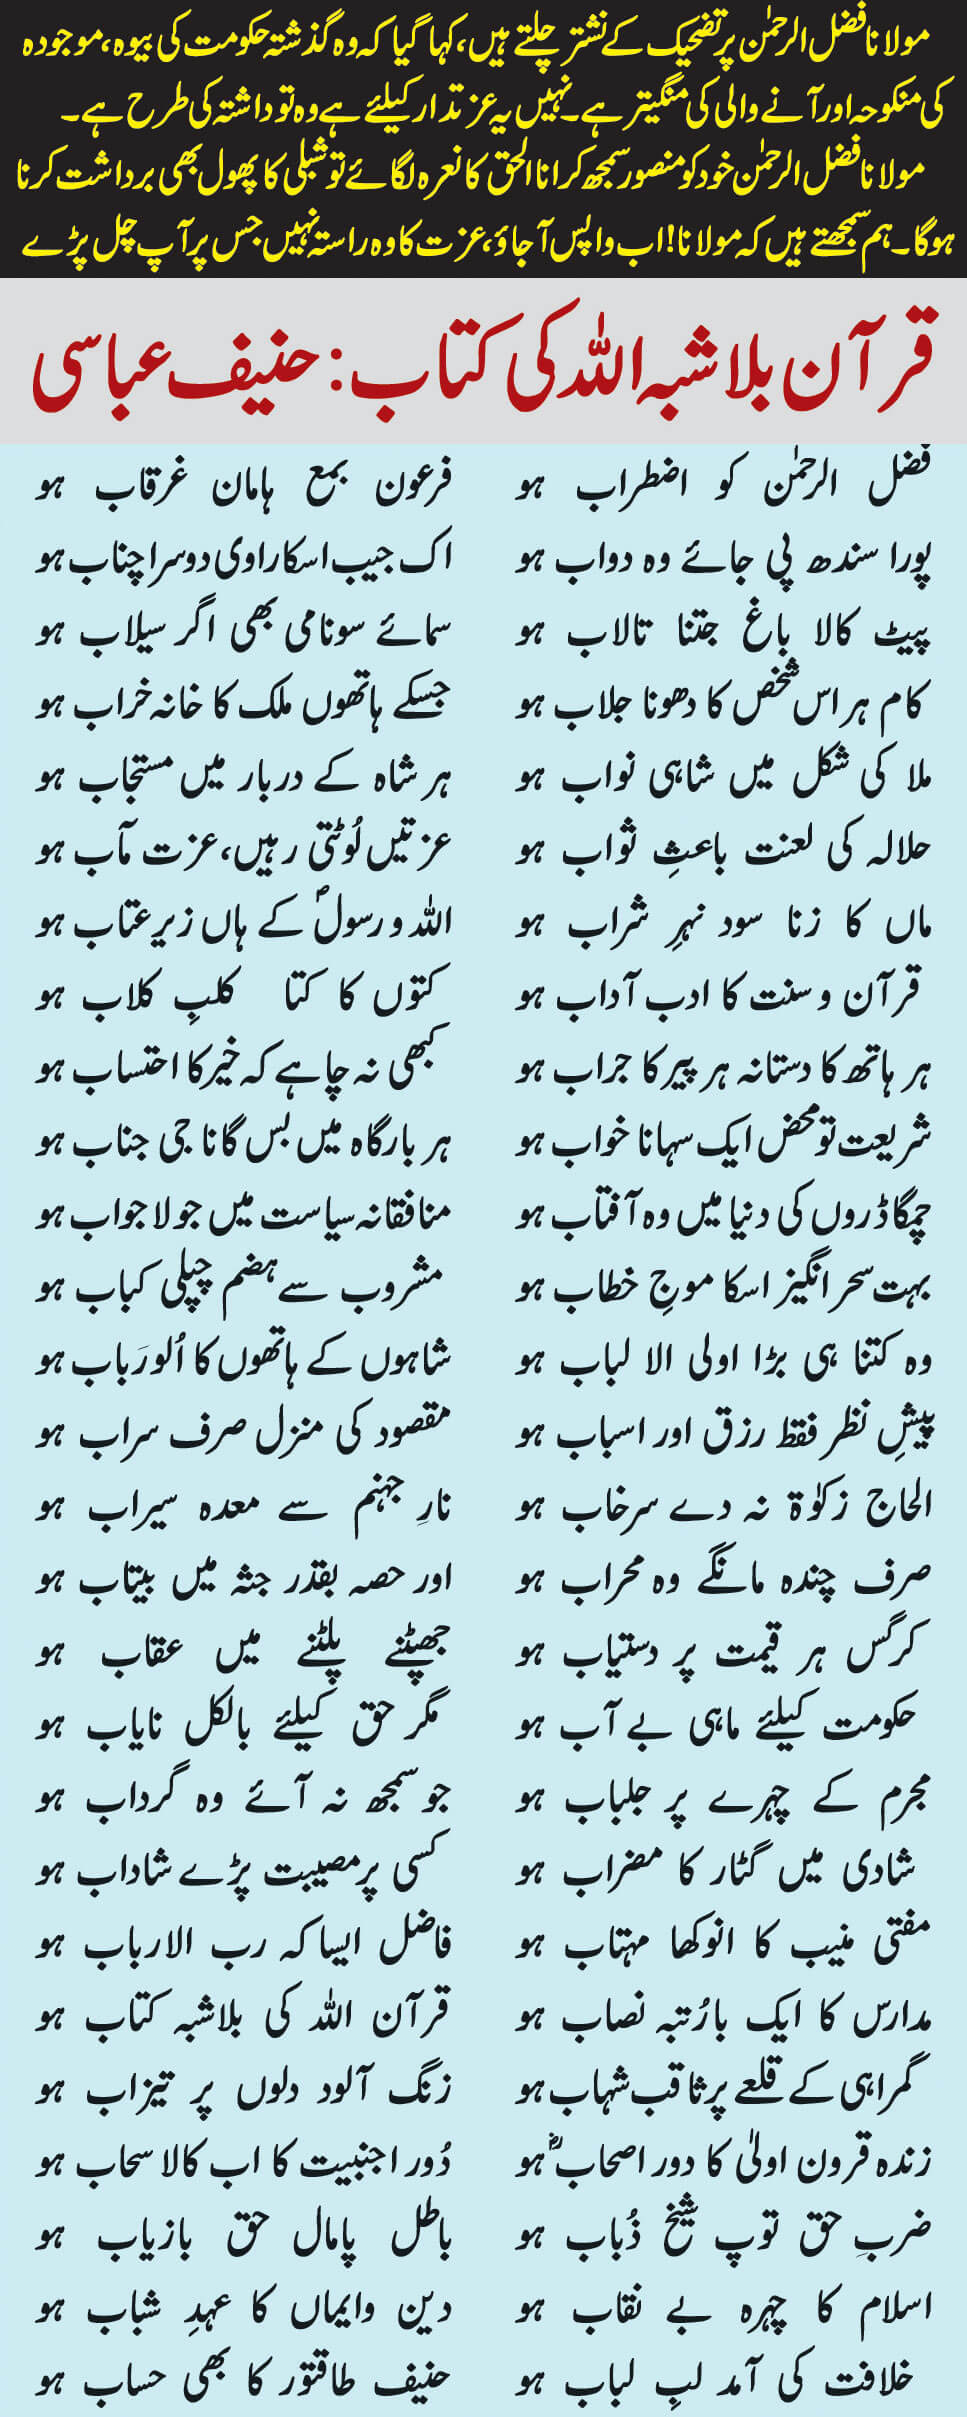 molana-fazal-ur-rehman-chapli-kabab-kalabagh-dam-mufti-muneeb-halala-teen-talaq-syed-atiq-ur-rehman-gailan(2)i